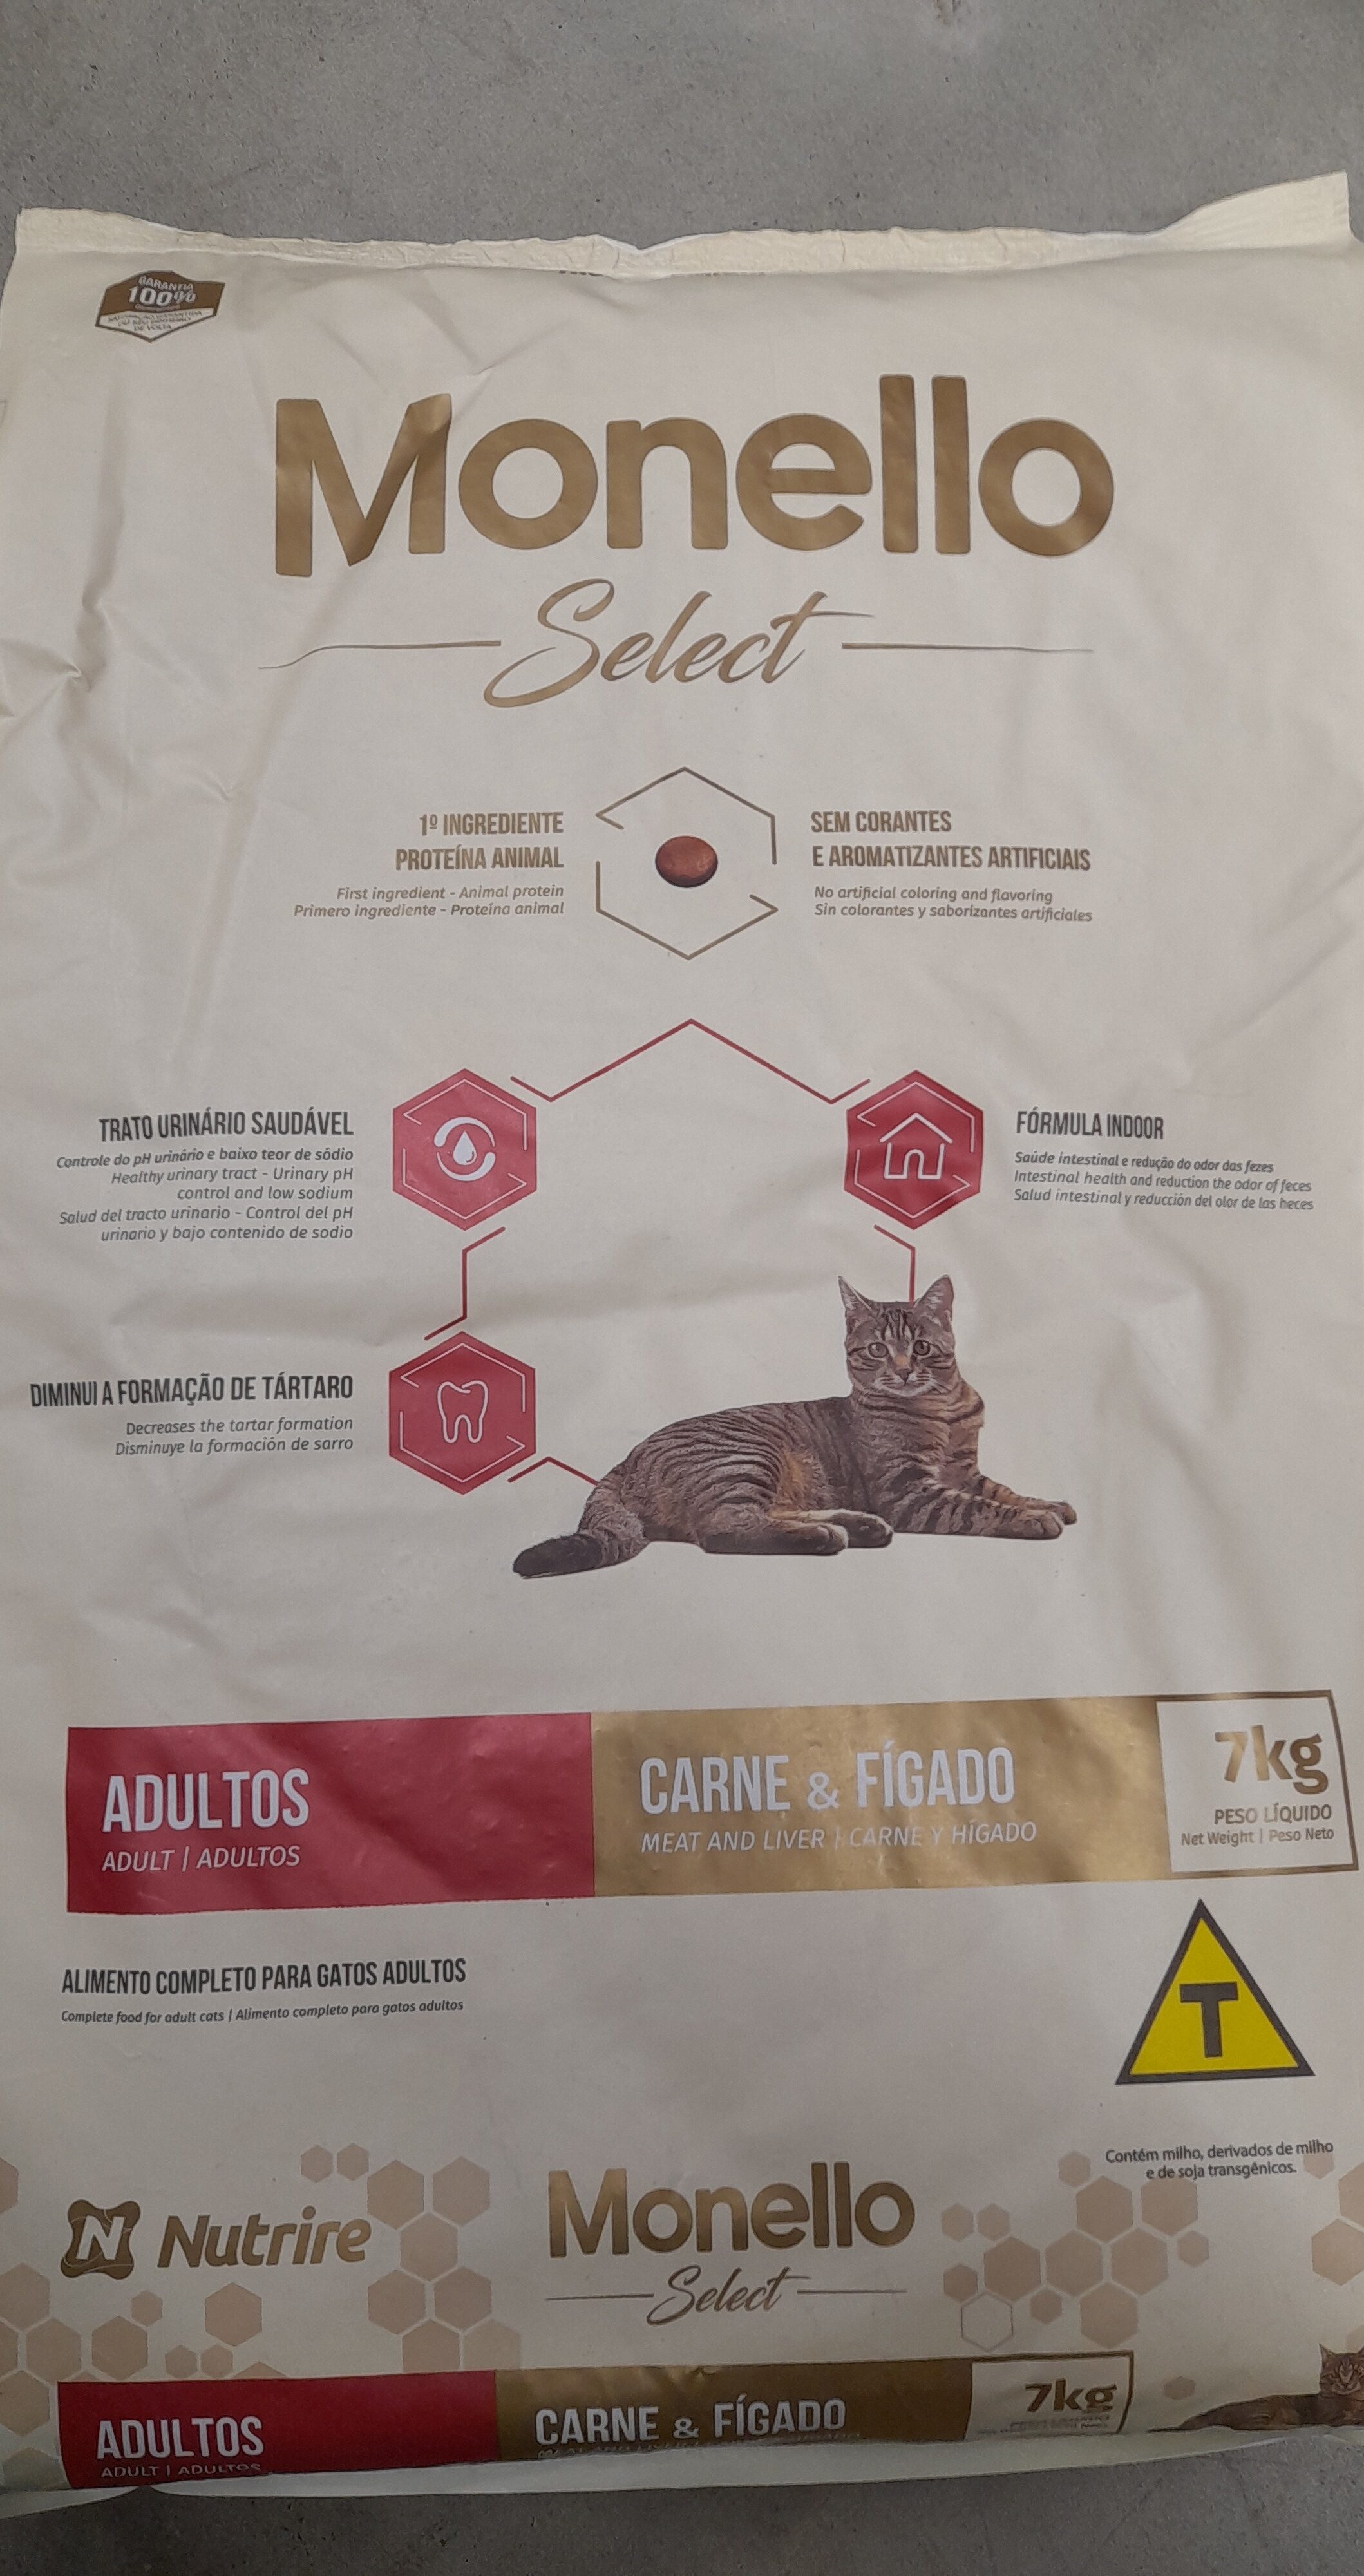 Monello gatos ad carn/fig - Product - pt